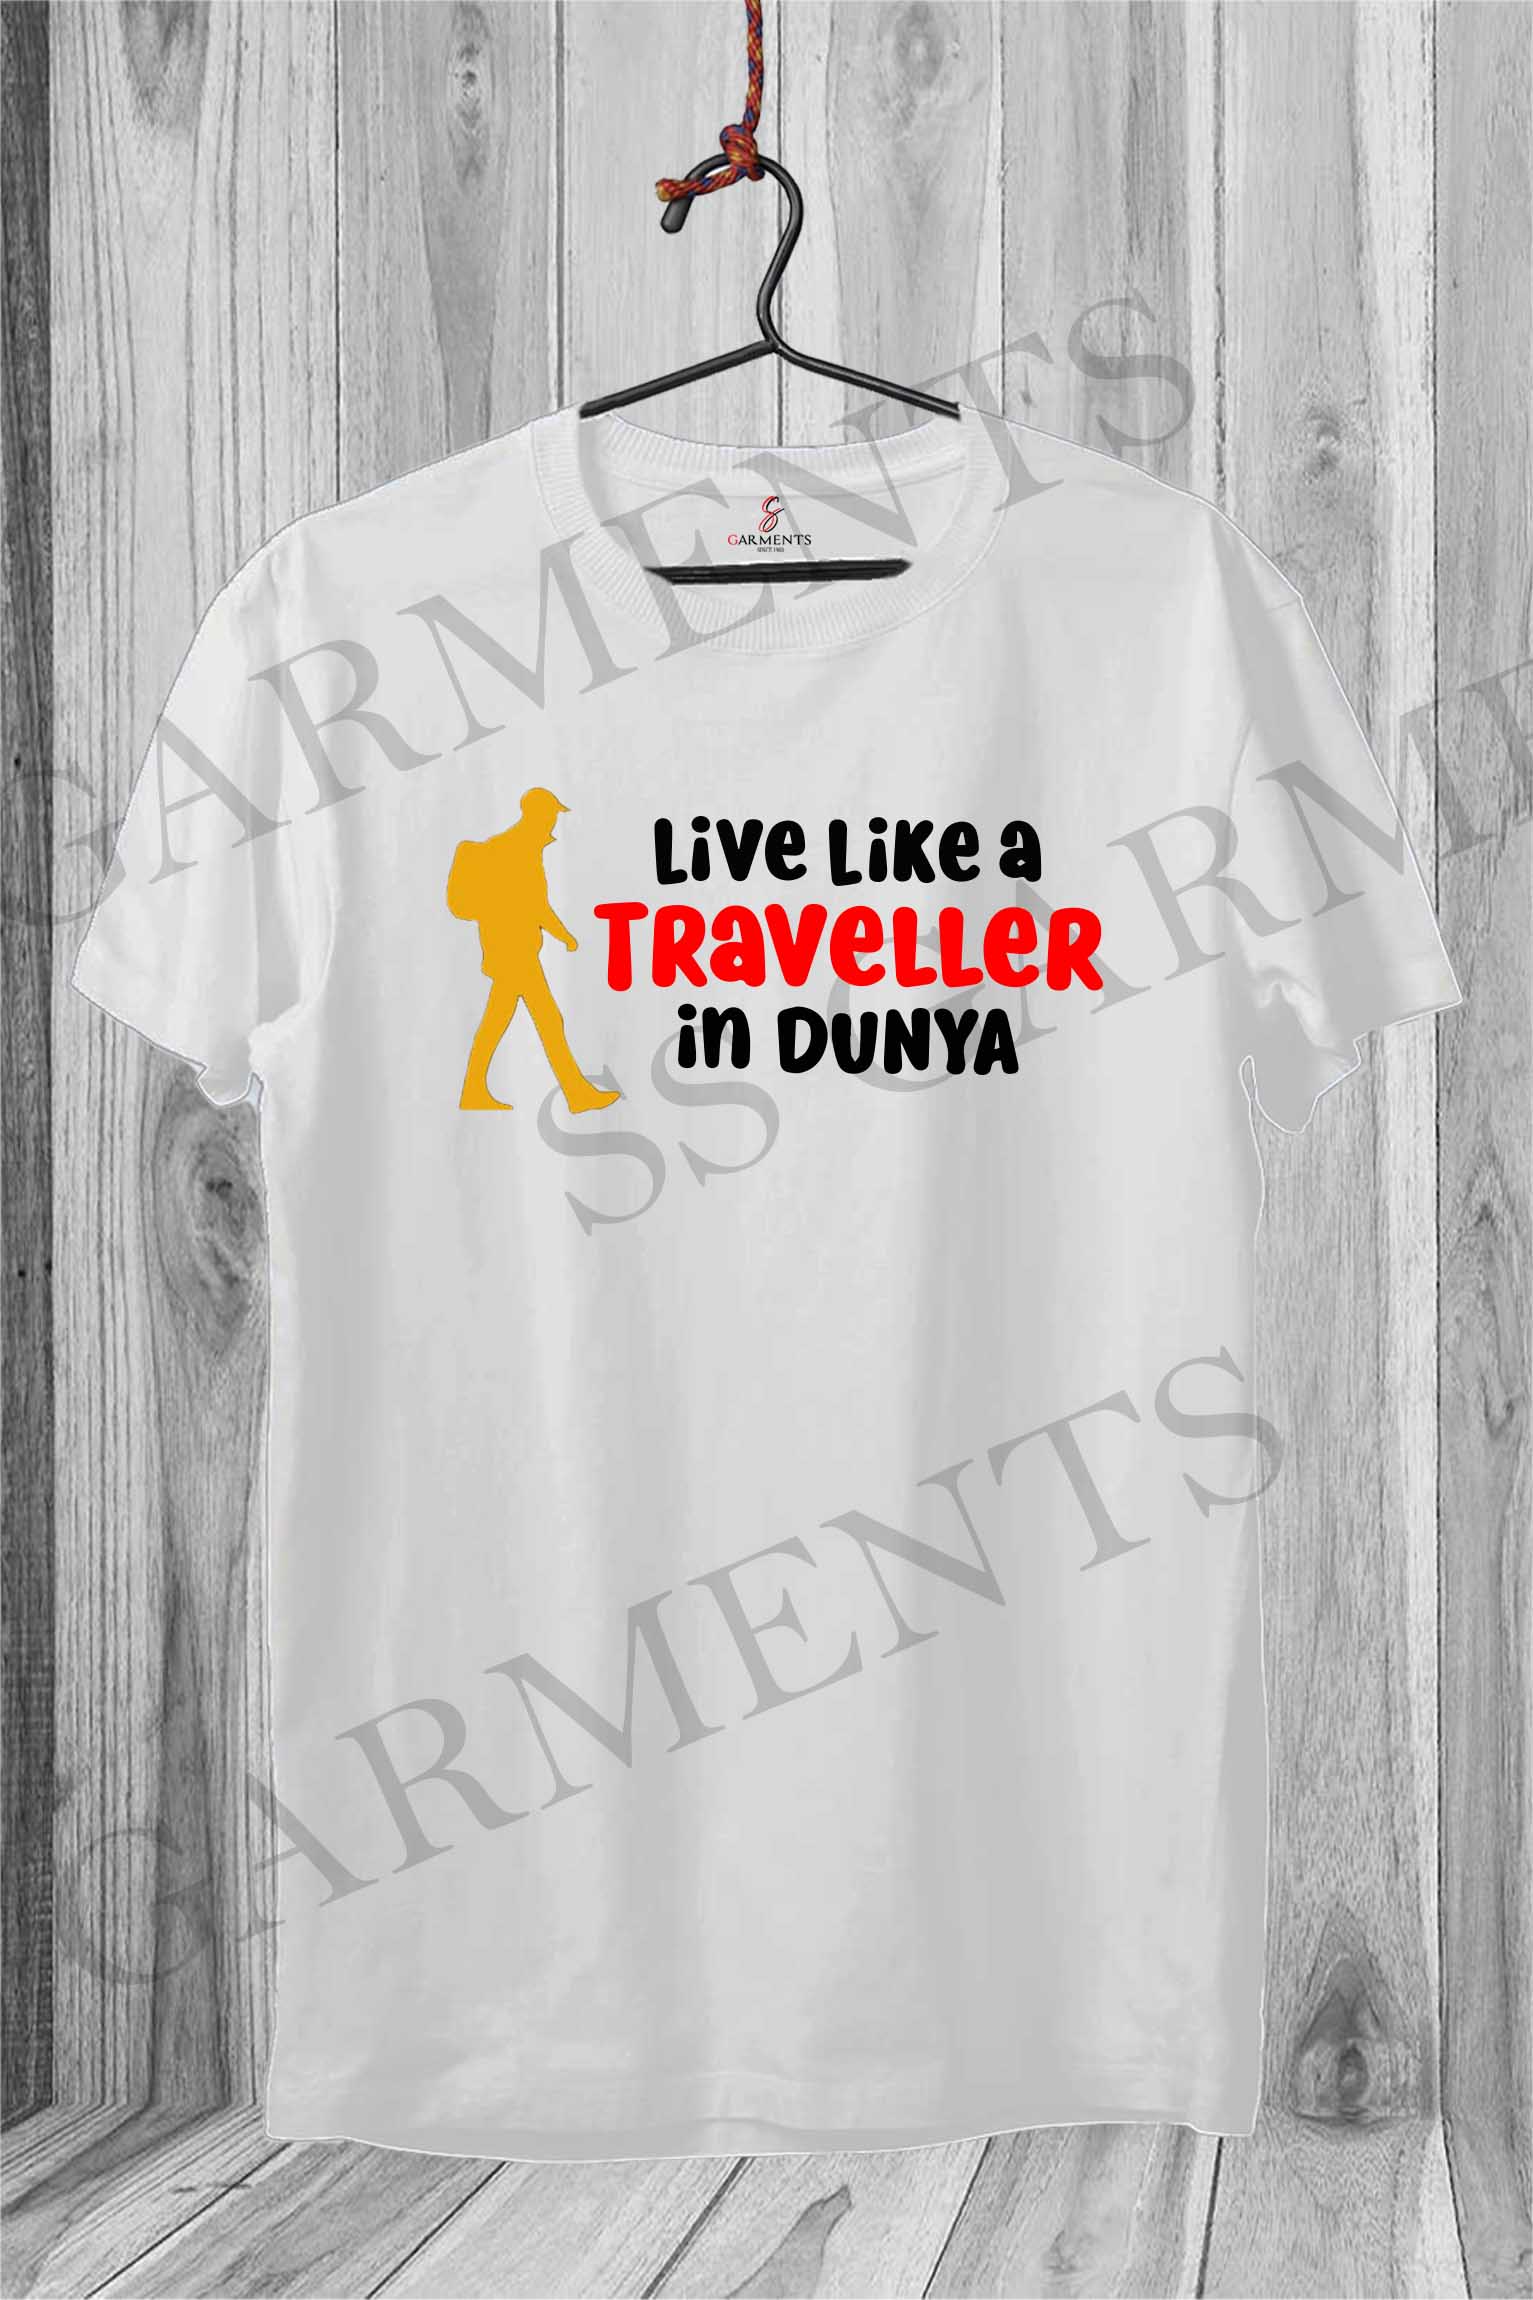 Live like traveller tshirts for sale